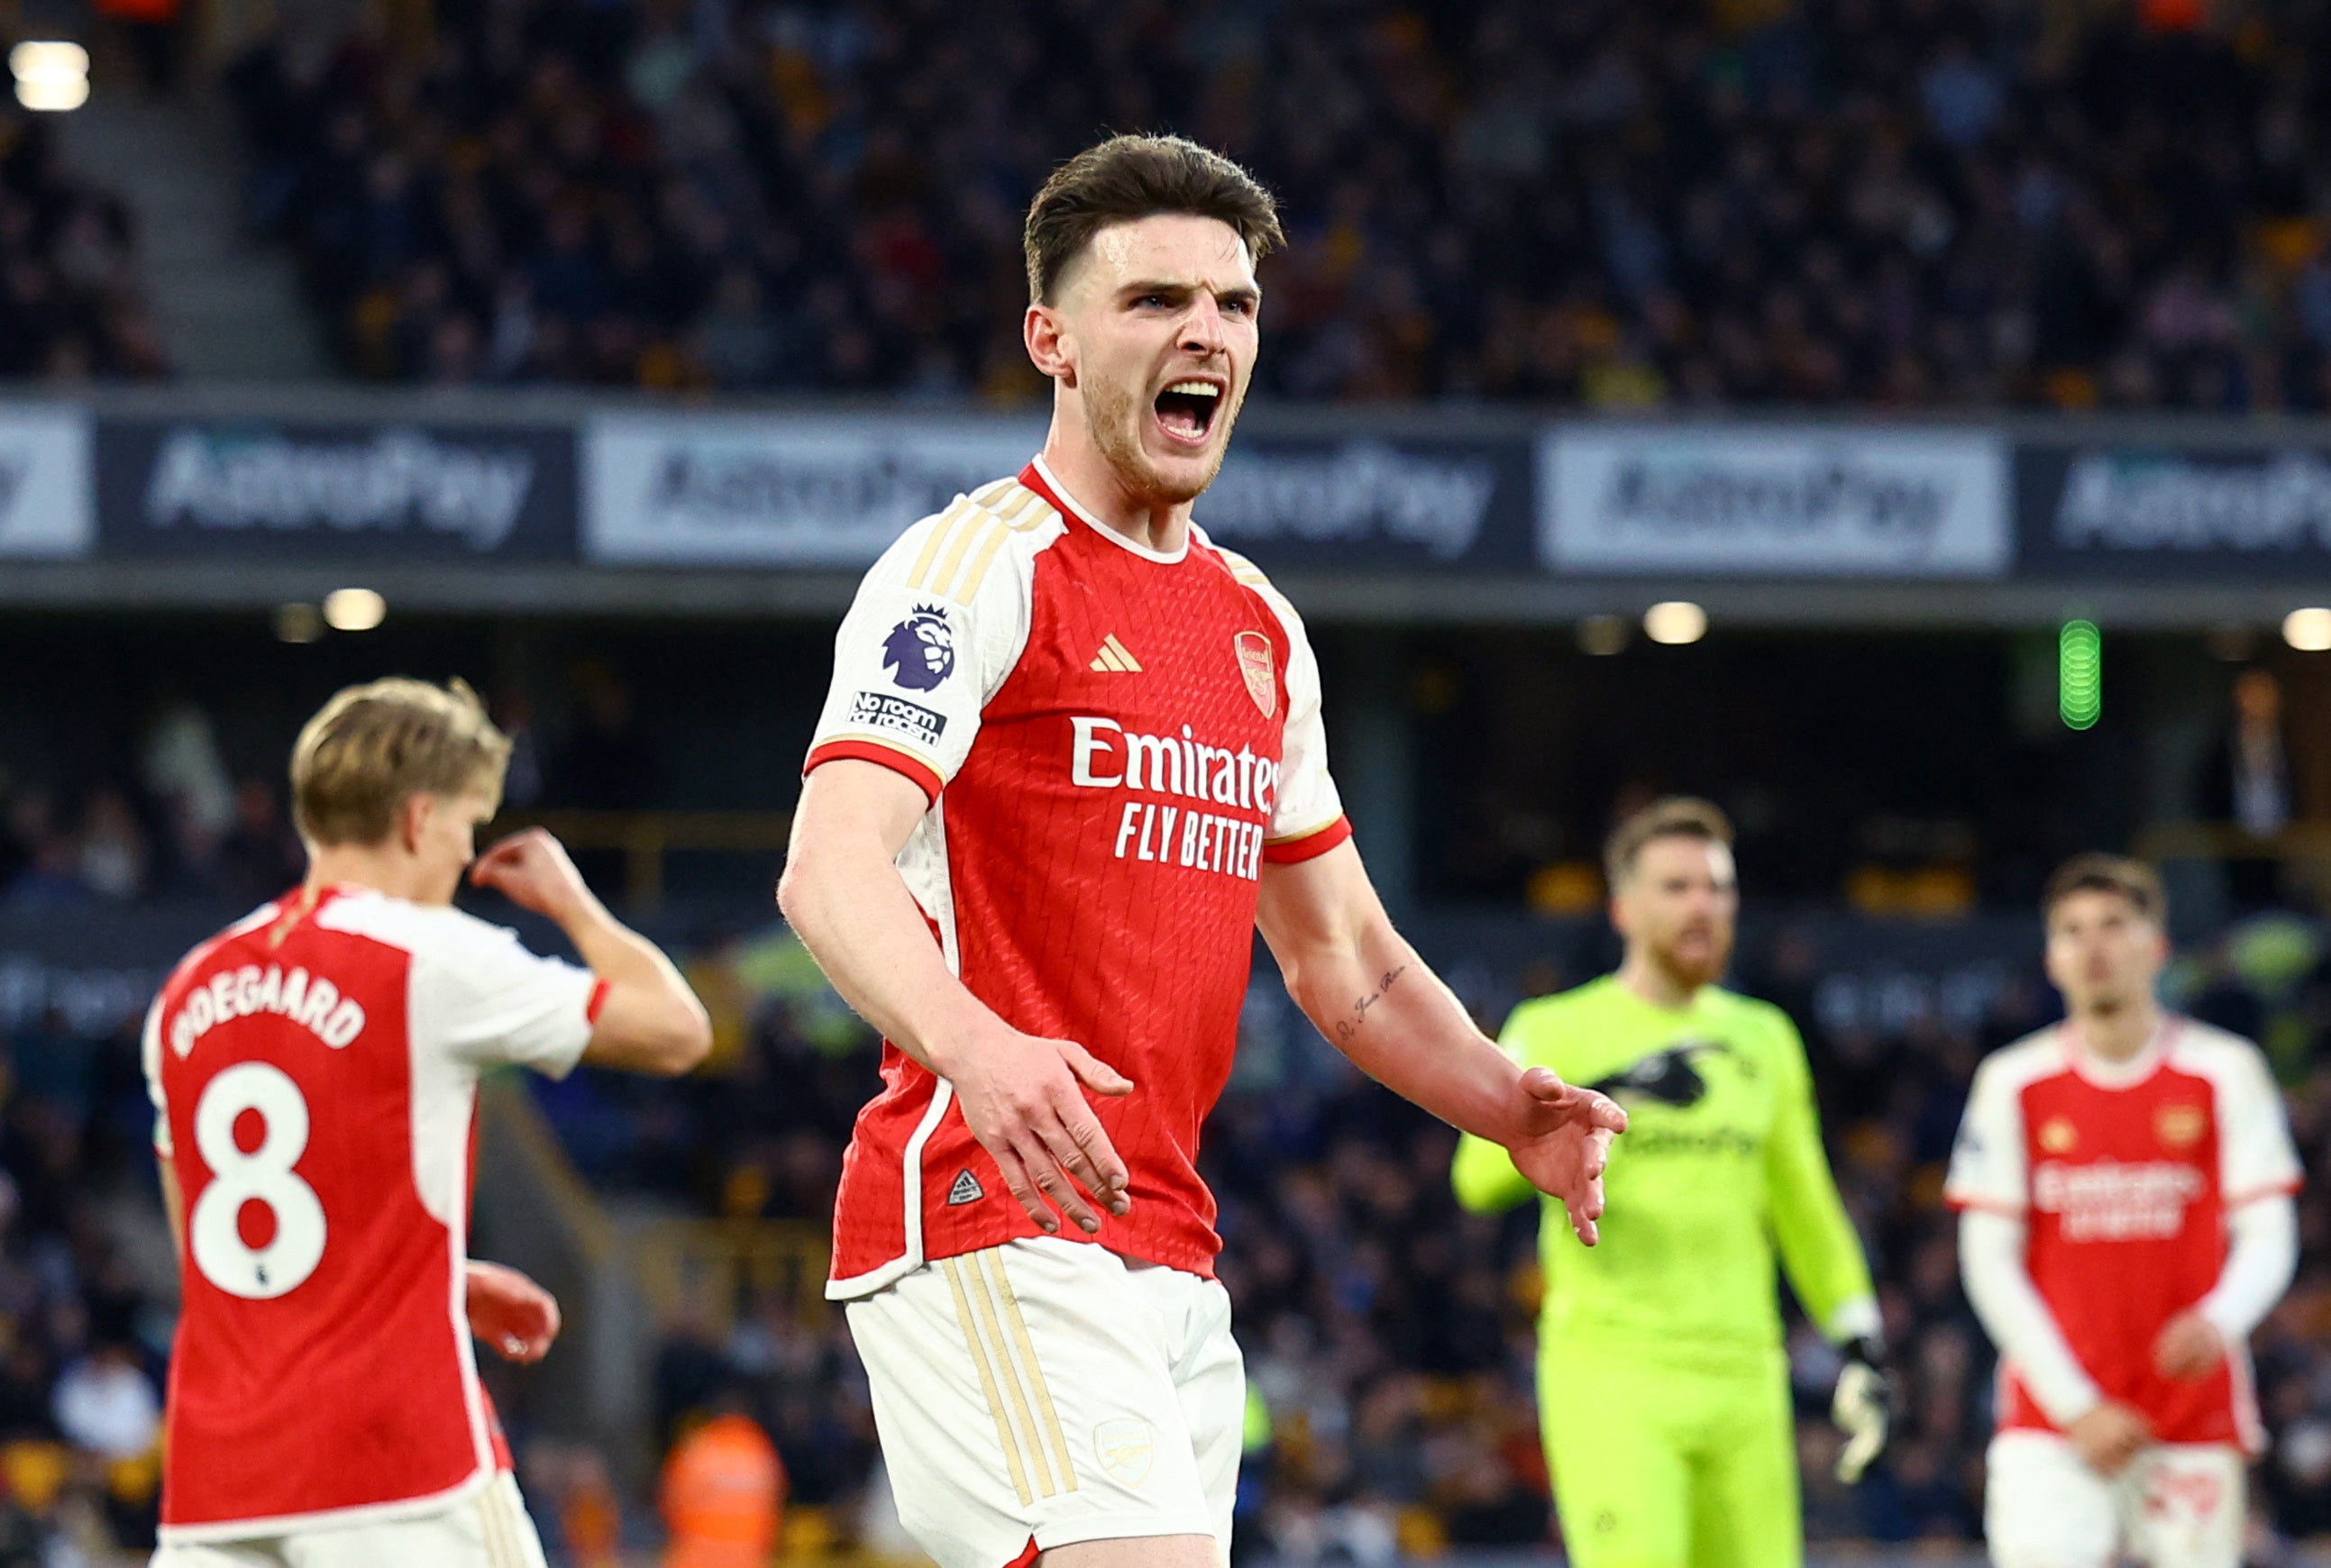 Declan Rice has propelled Arsenal’s title push this season